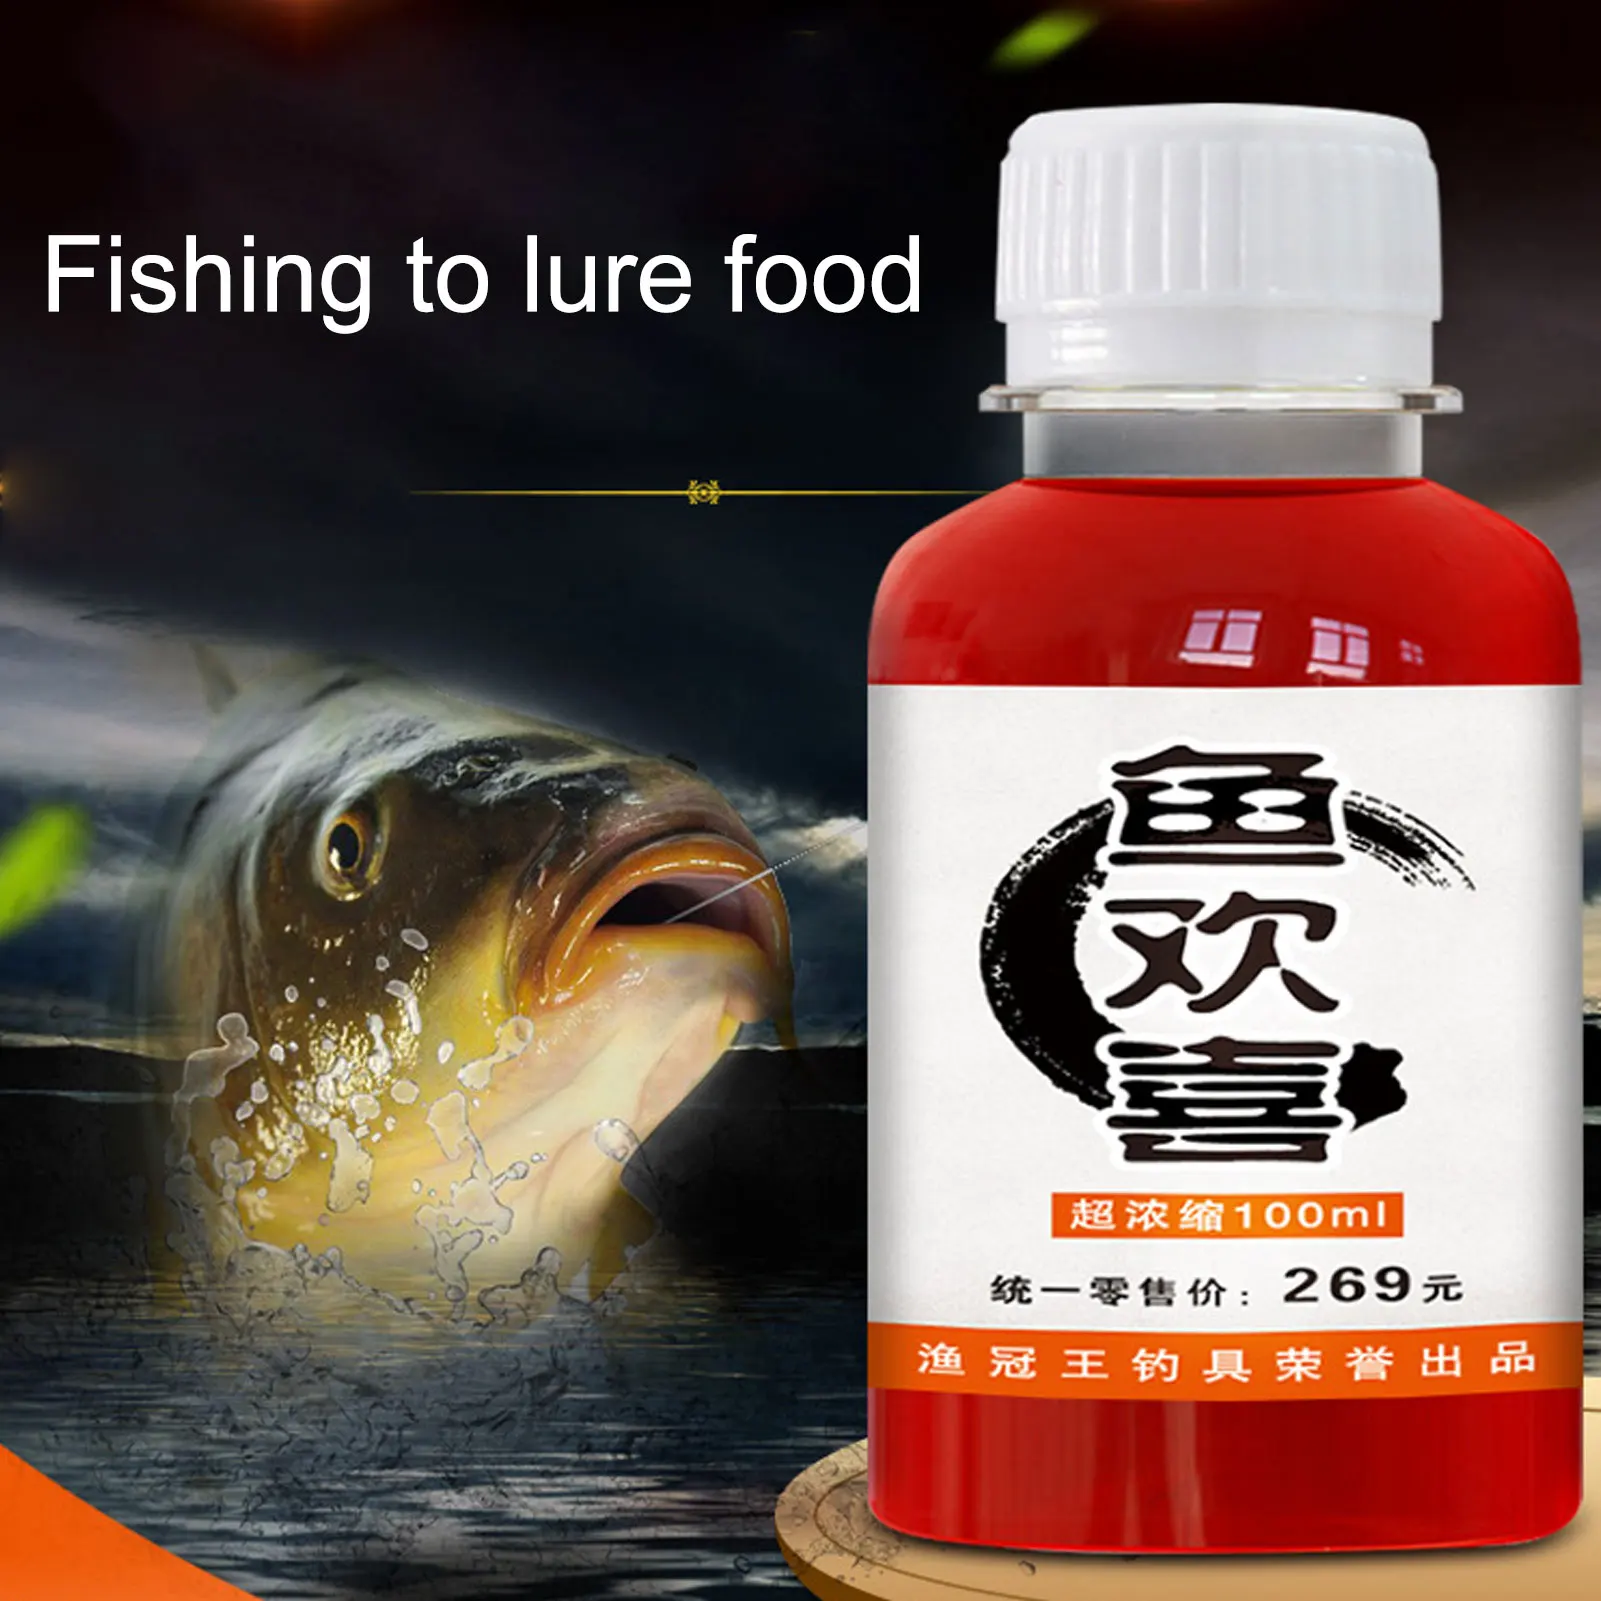 

100ml Fishing Attractant Liquid Baits High Density Natural Attractants Eco-Friendly And Efficient Fish Attractant